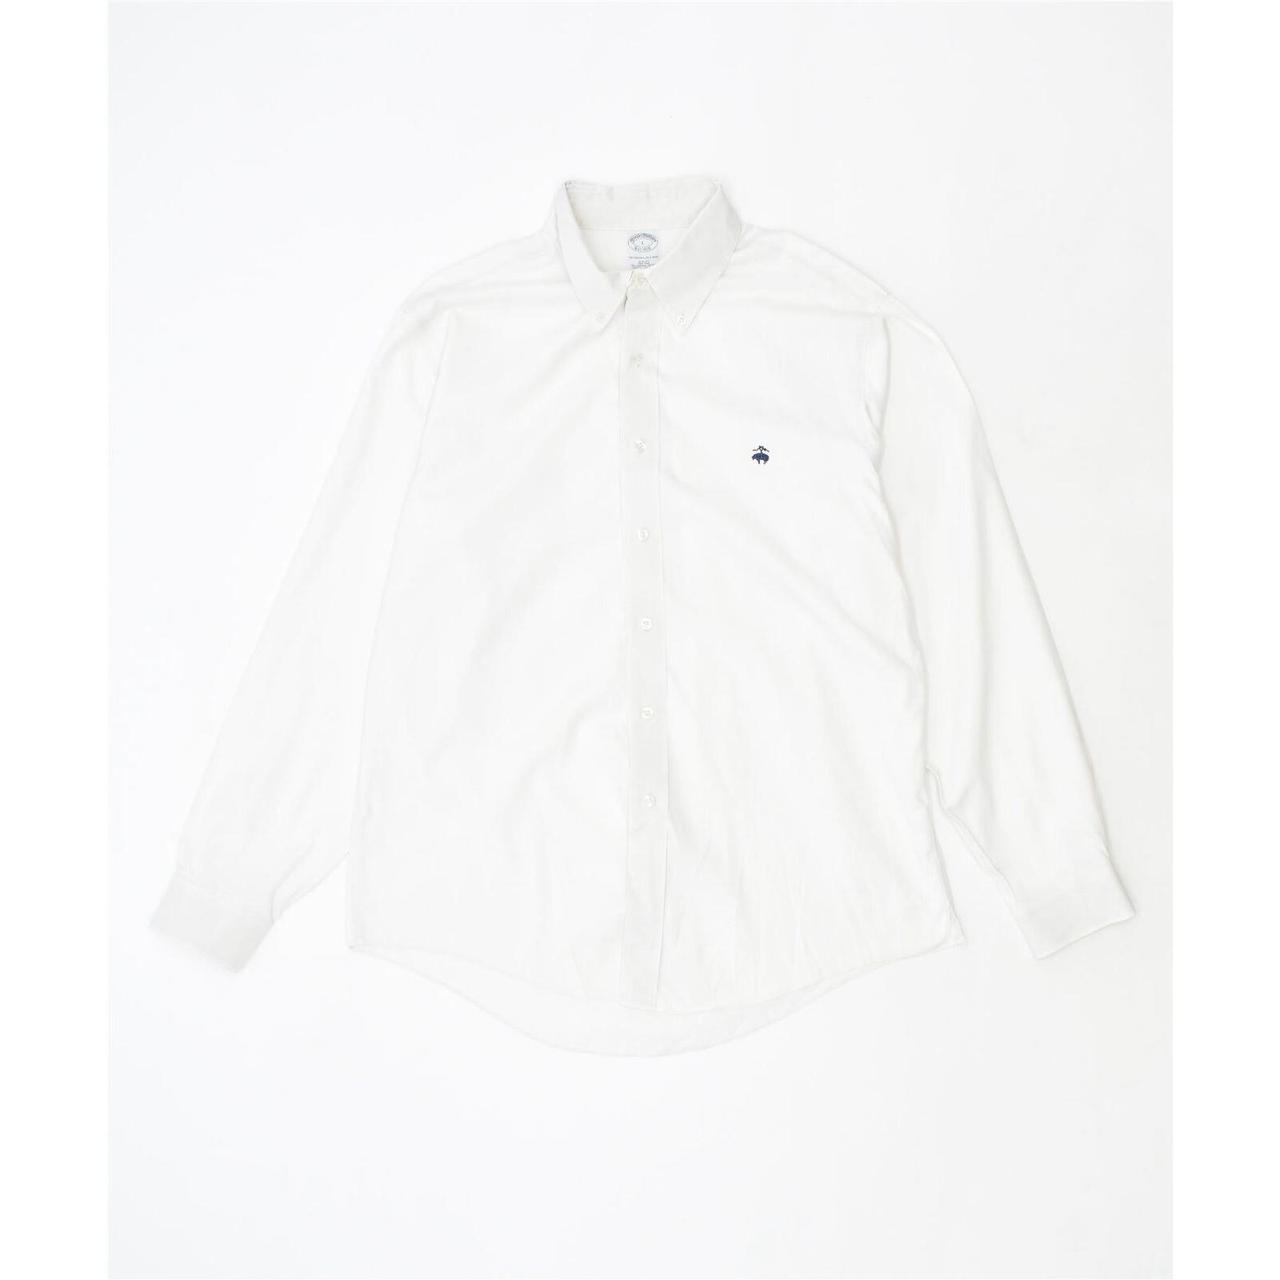 Product Image 1 - BROOKSFIELD Mens Shirt Large White